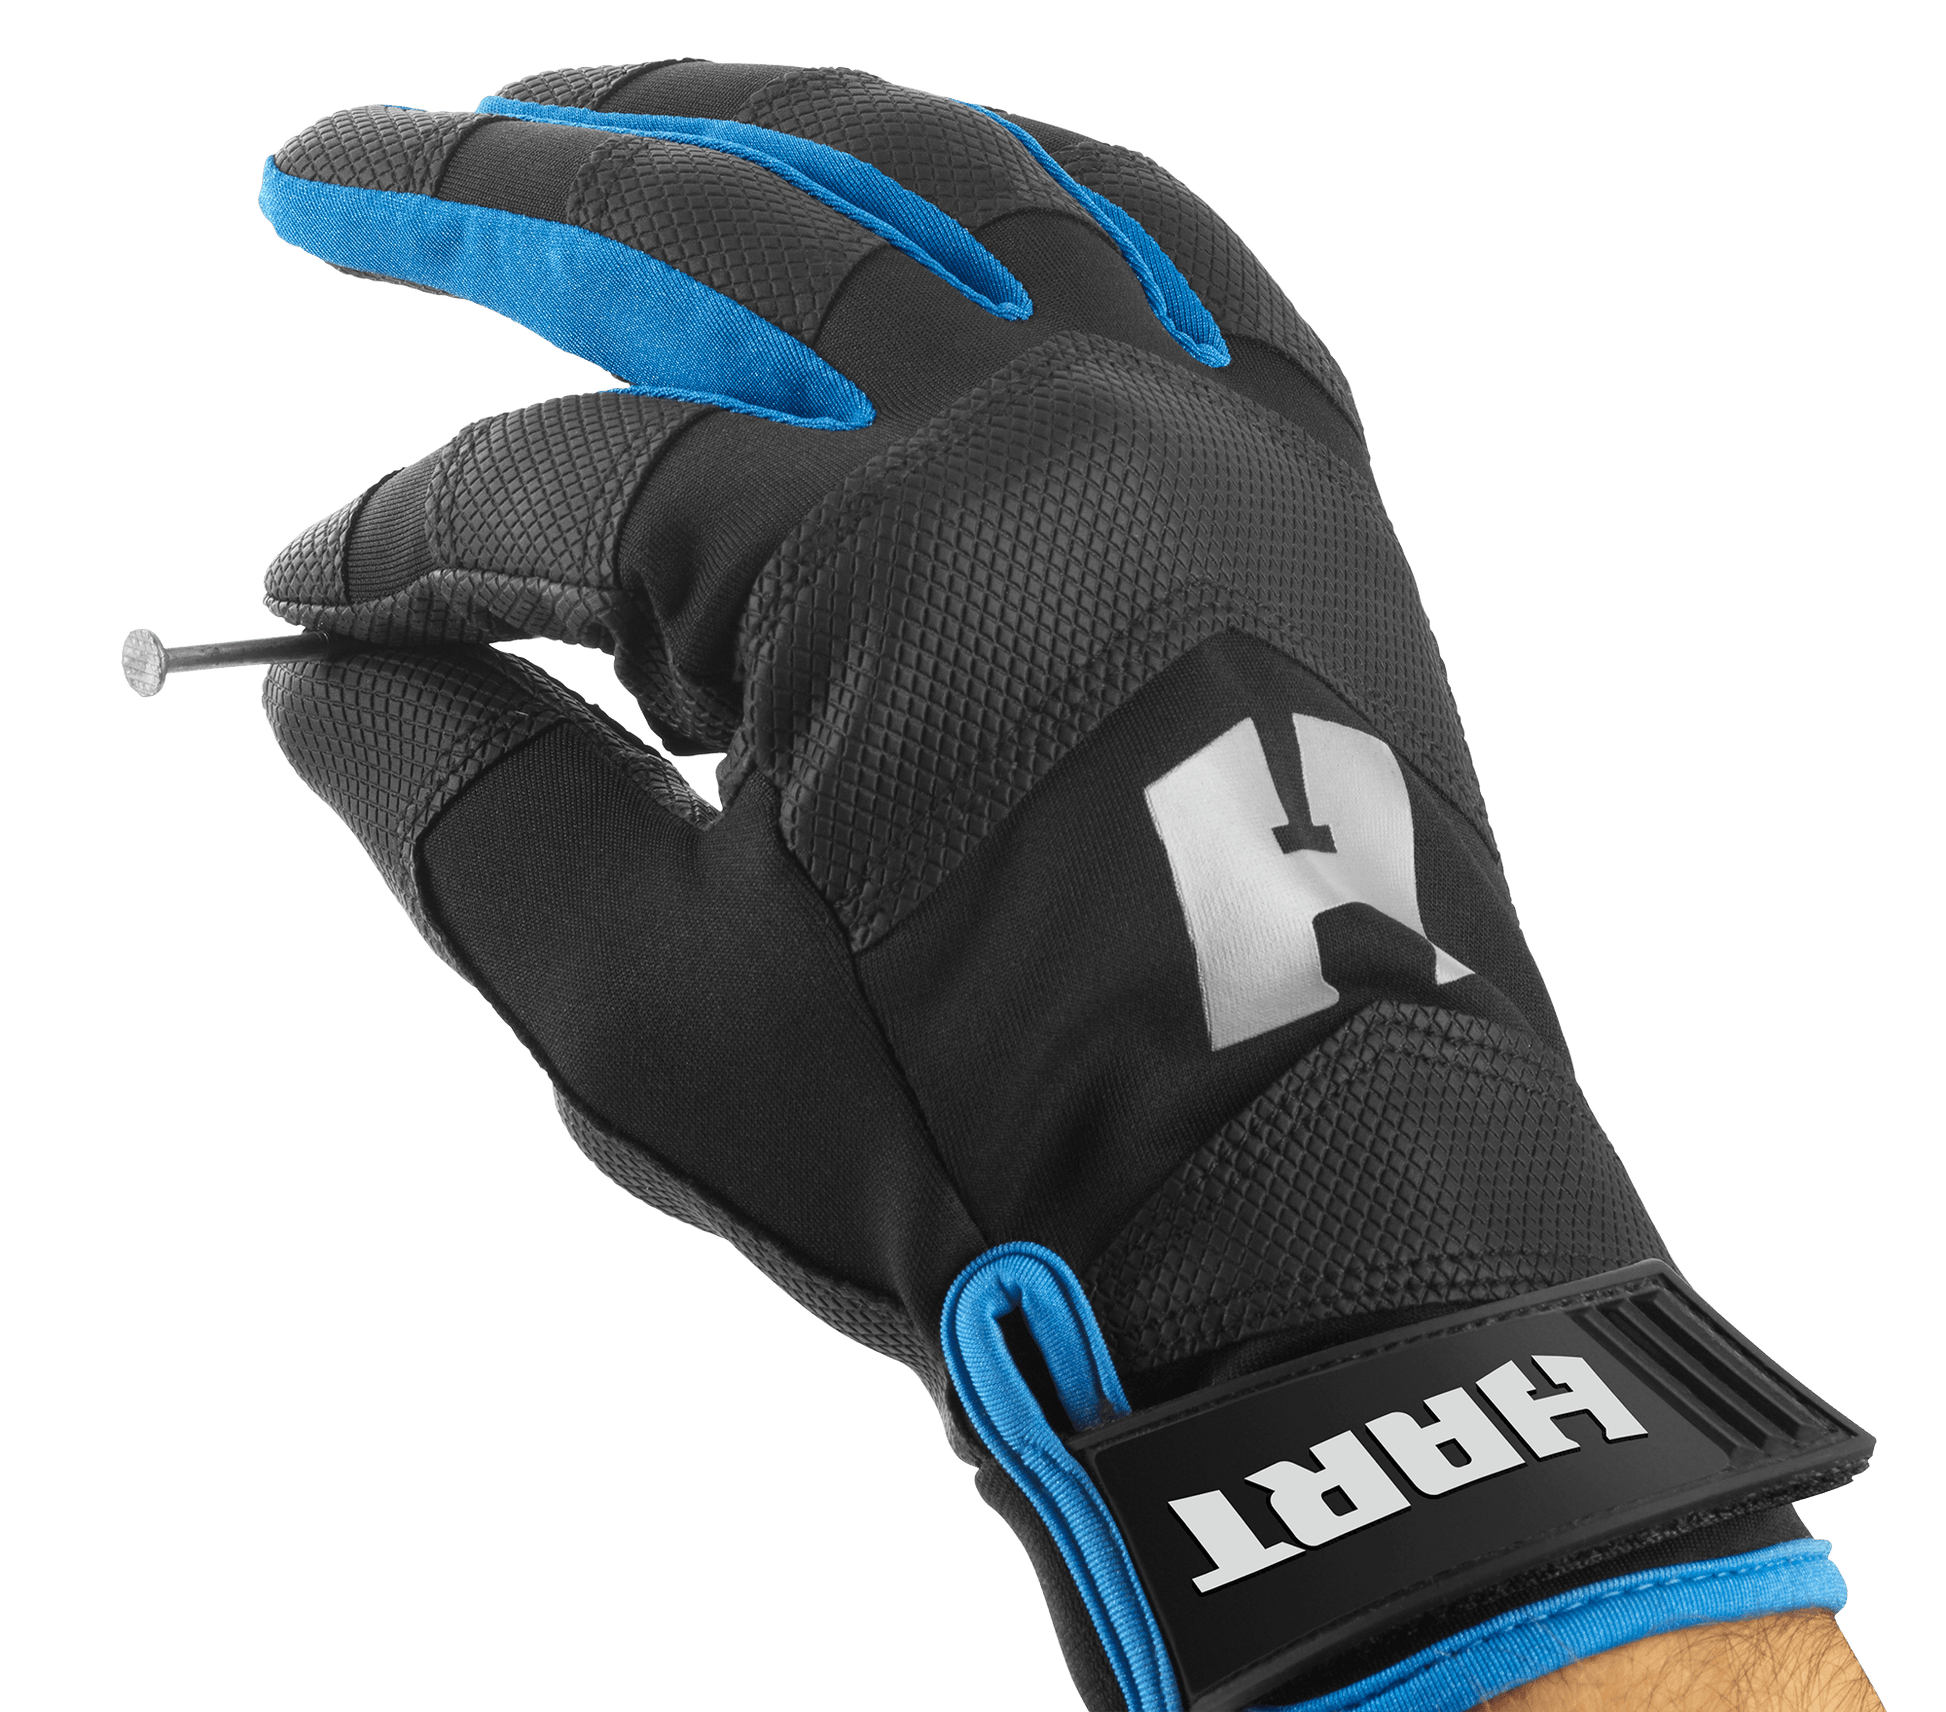 Performance Fit Gloves - Medium